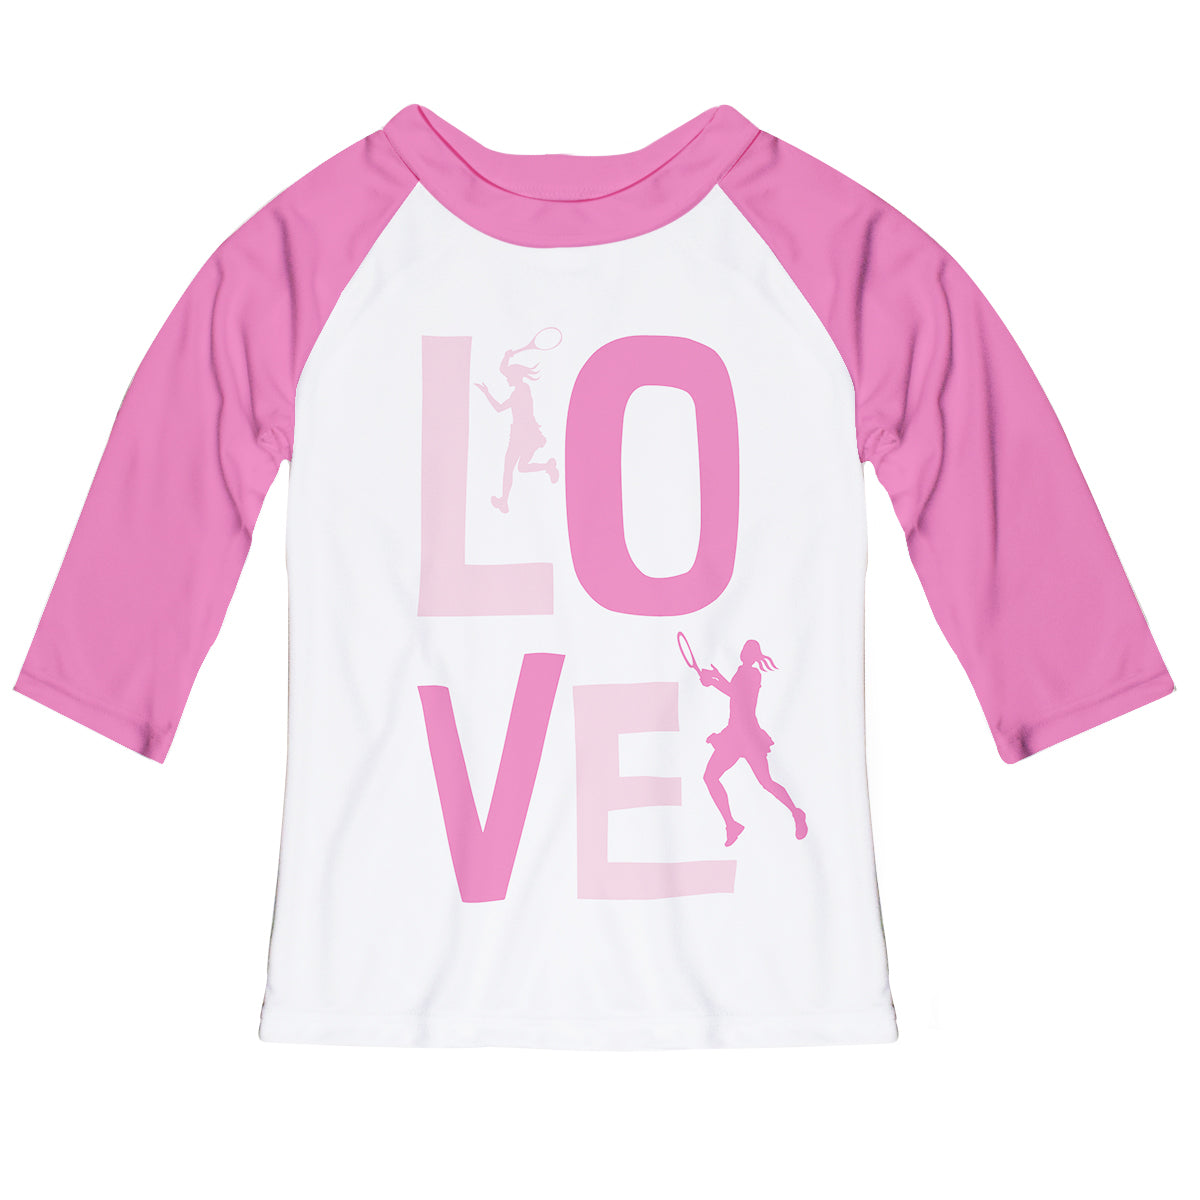 Tennis Love White and Pink Raglan Tee Shirt 3/4 Sleeve